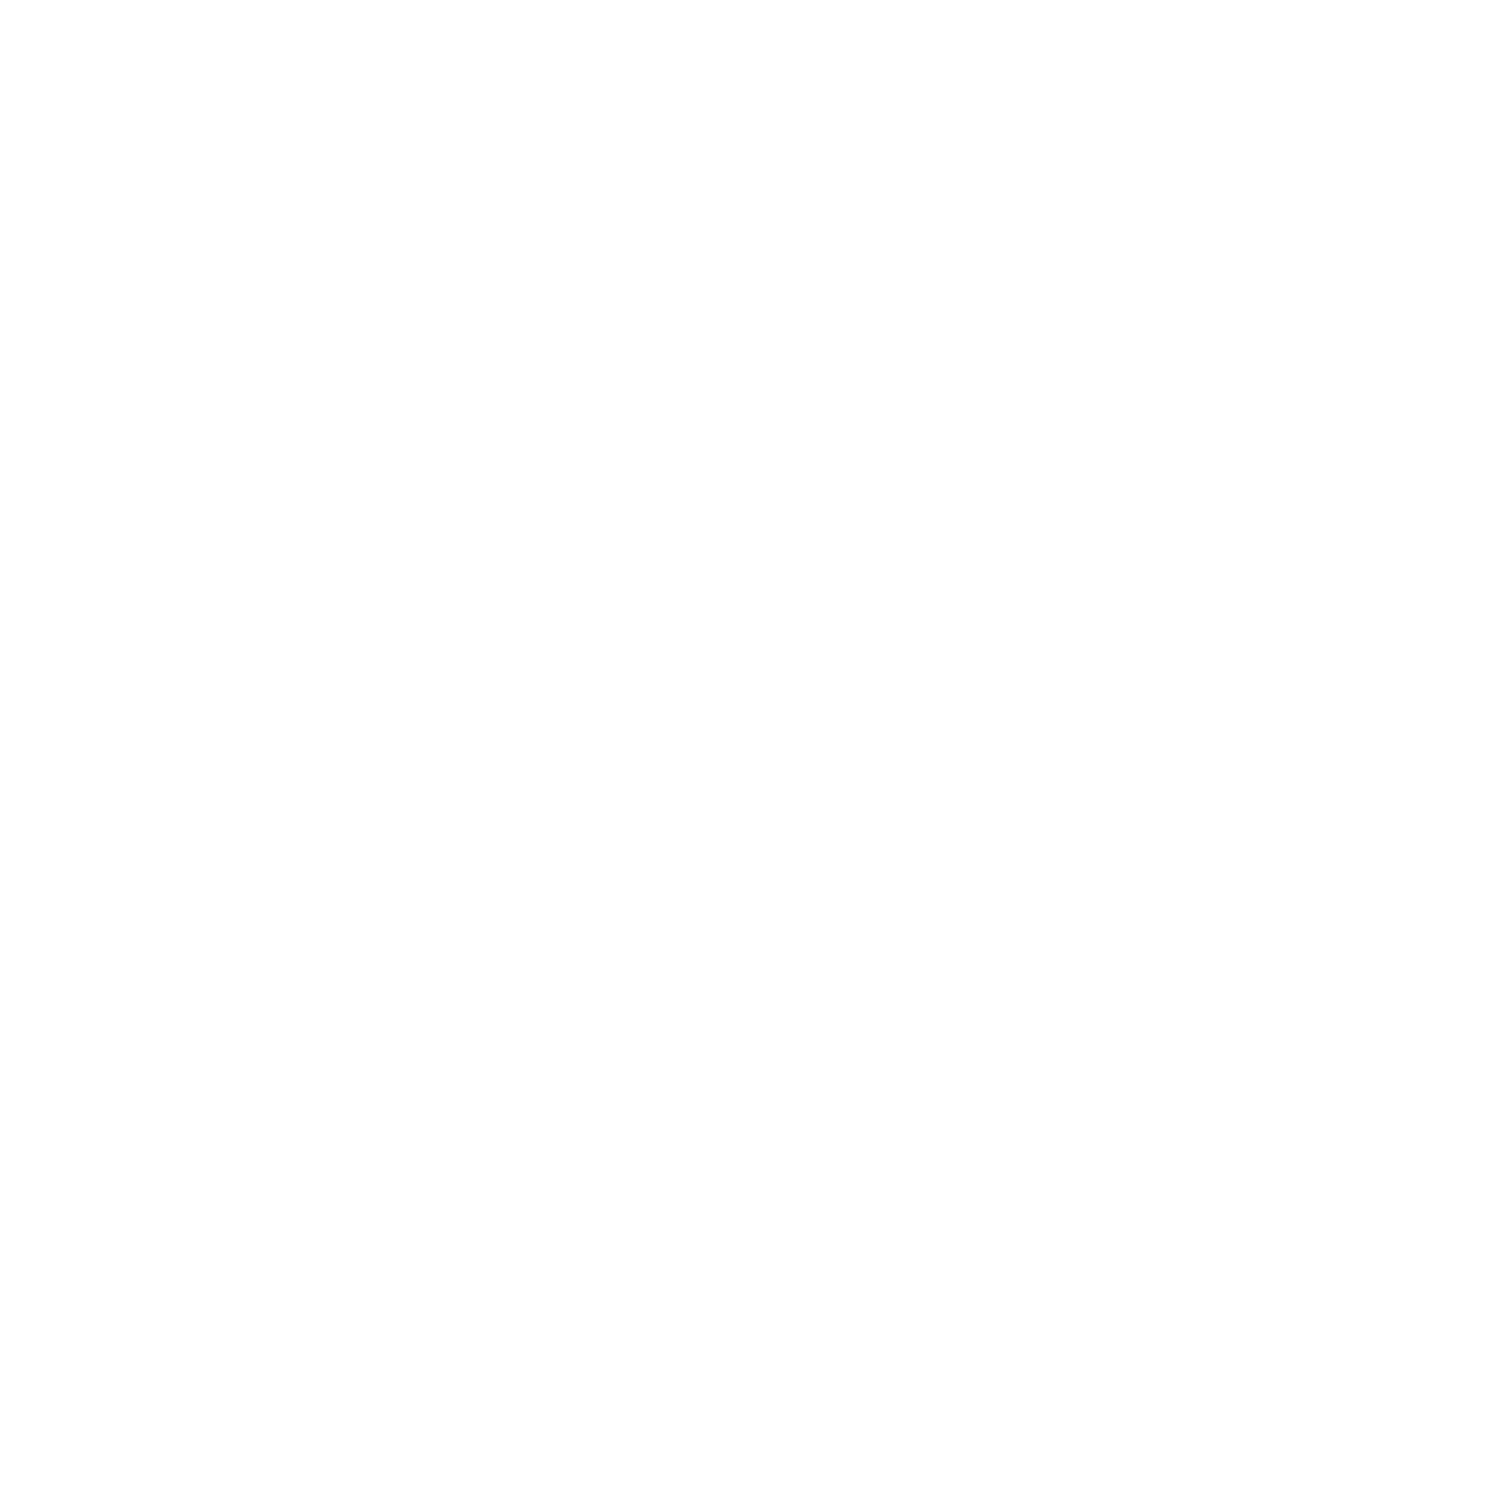 Alquímica Film Lab